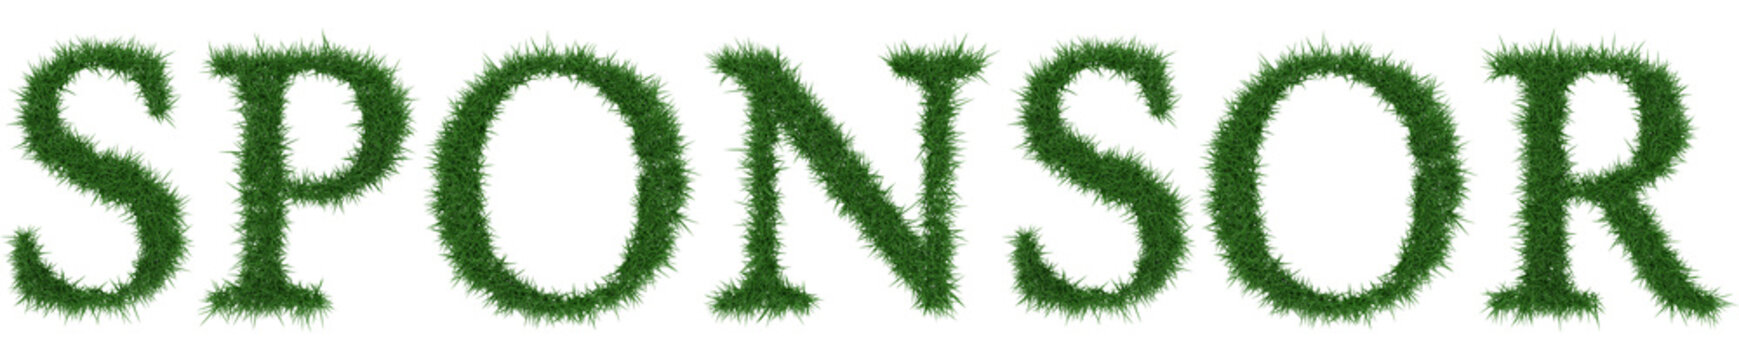 Sponsor - 3D rendering fresh Grass letters isolated on whhite background.